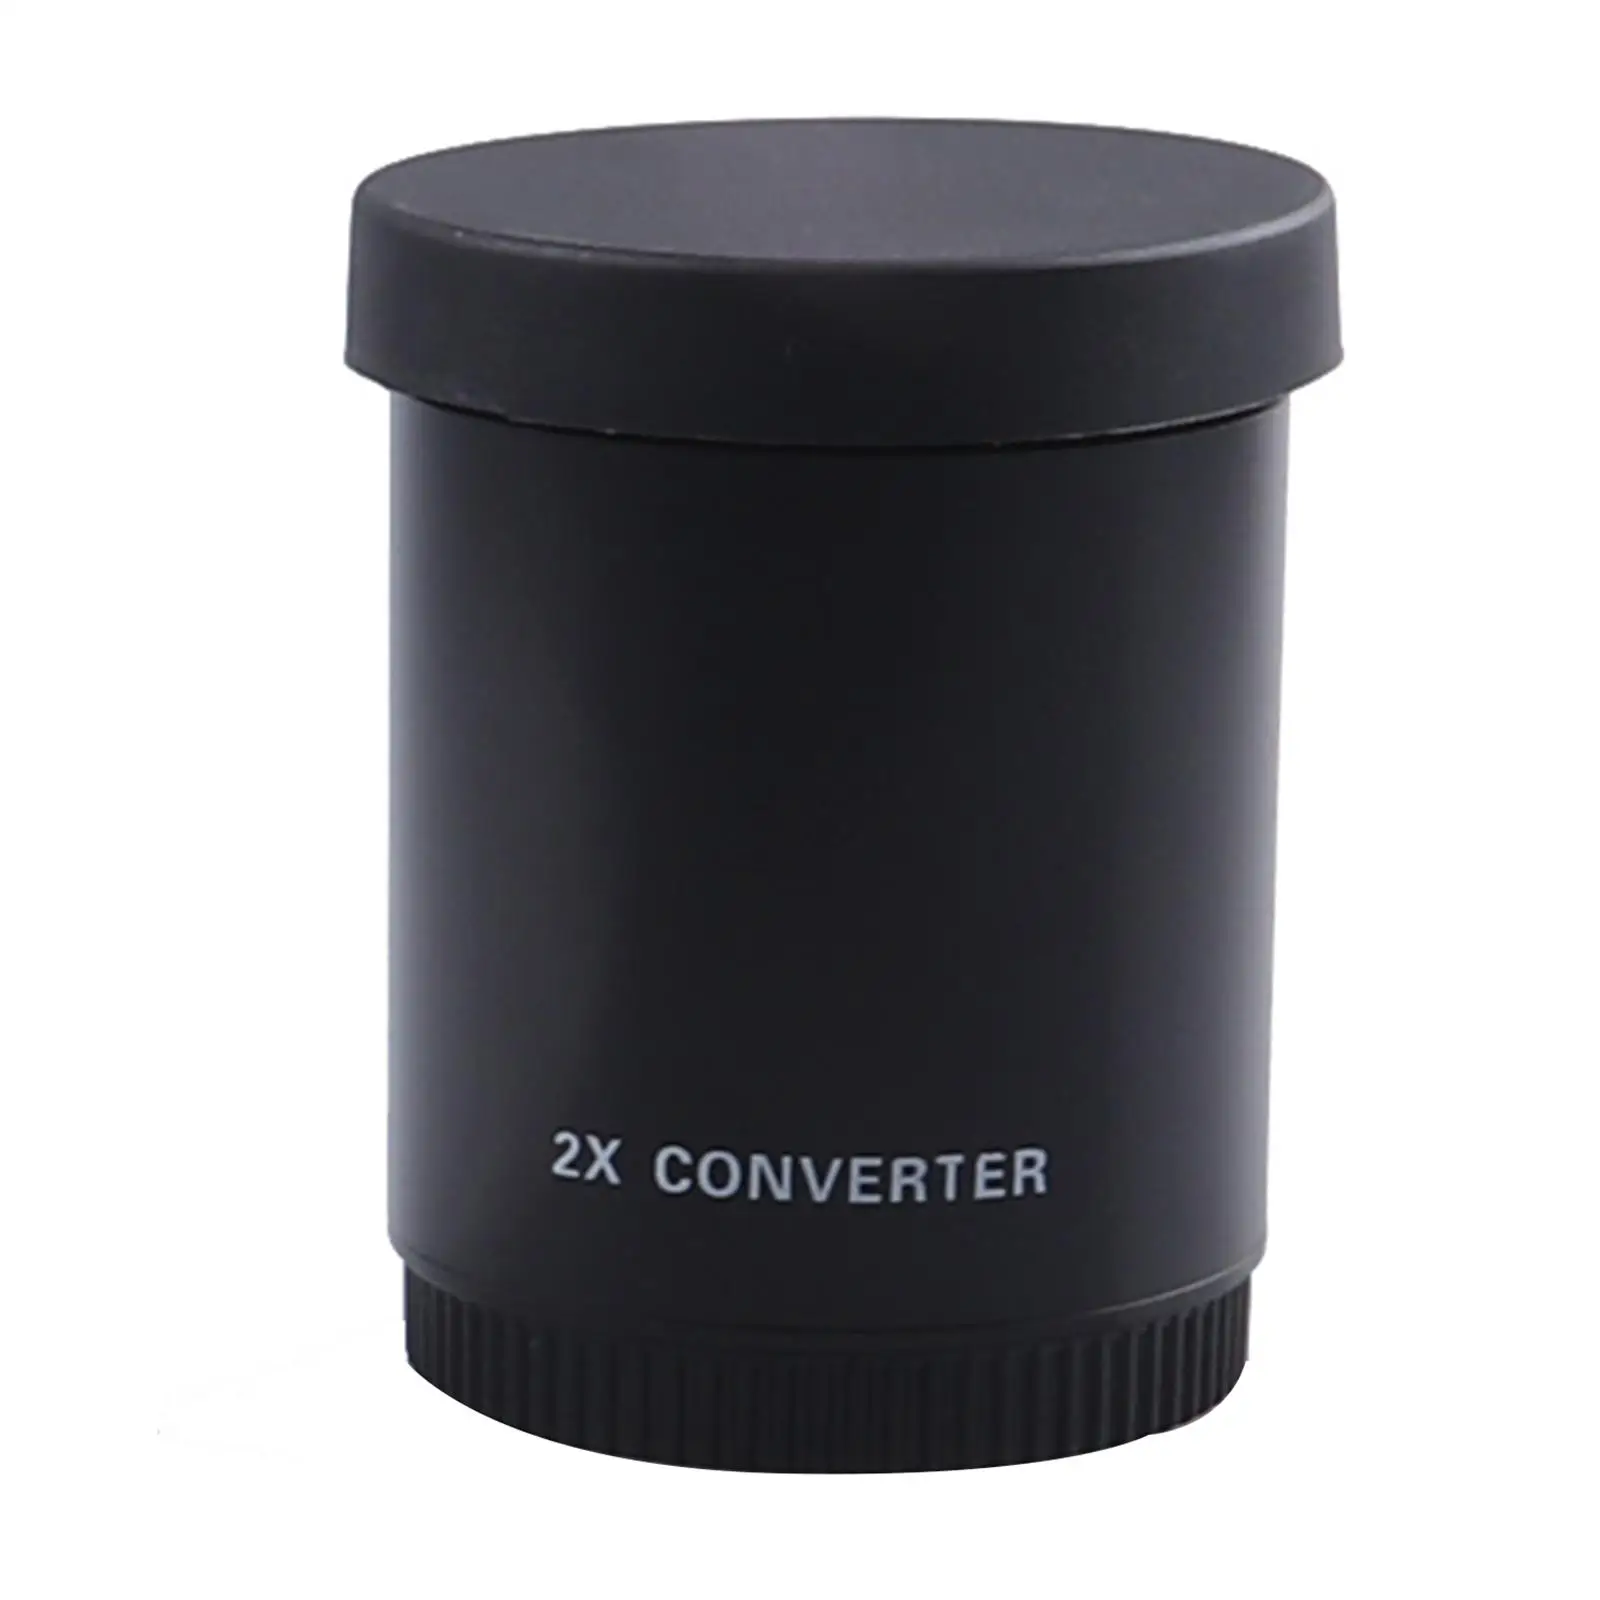 2x Teleconverter Lens Magnification Lens with Storage Bag Manual Focus for T2 Lenses 800mm 650-1300mm 500mm Camera